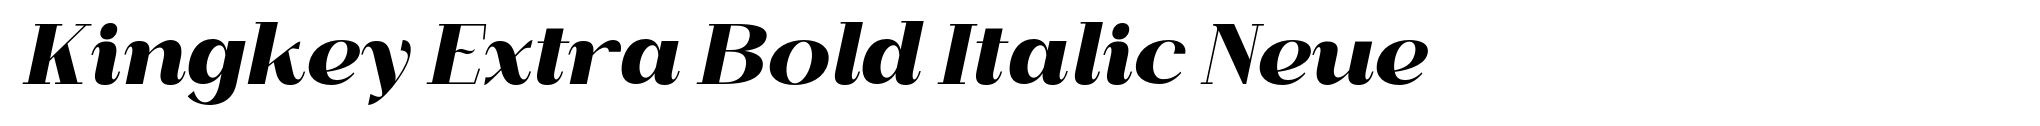 Kingkey Extra Bold Italic Neue image